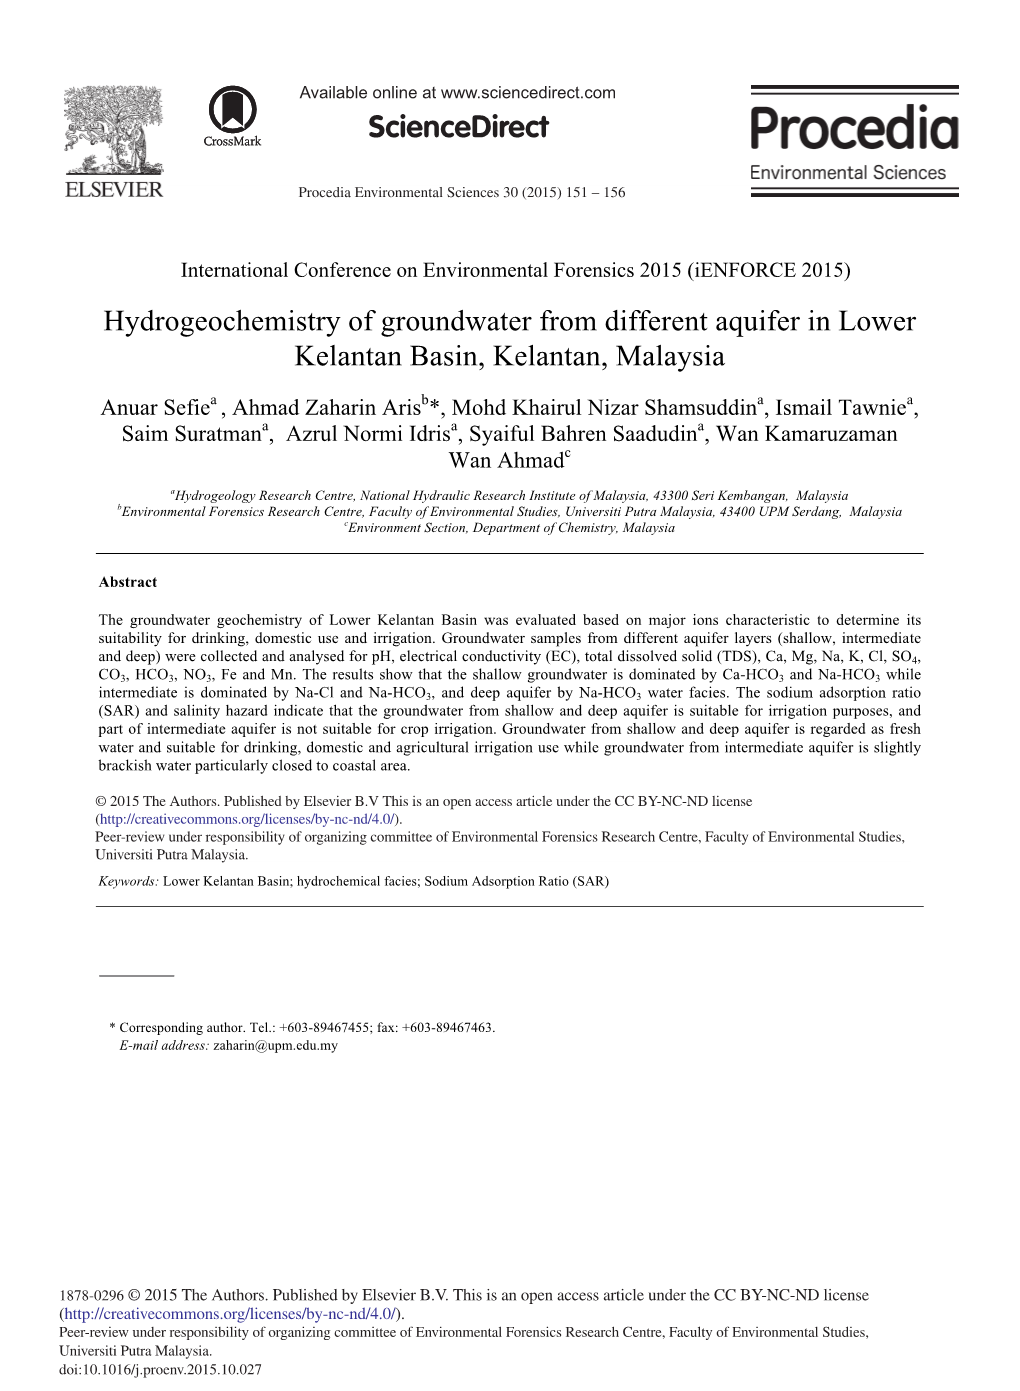 Hydrogeochemistry of Groundwater from Different Aquifer in Lower Kelantan Basin, Kelantan, Malaysia